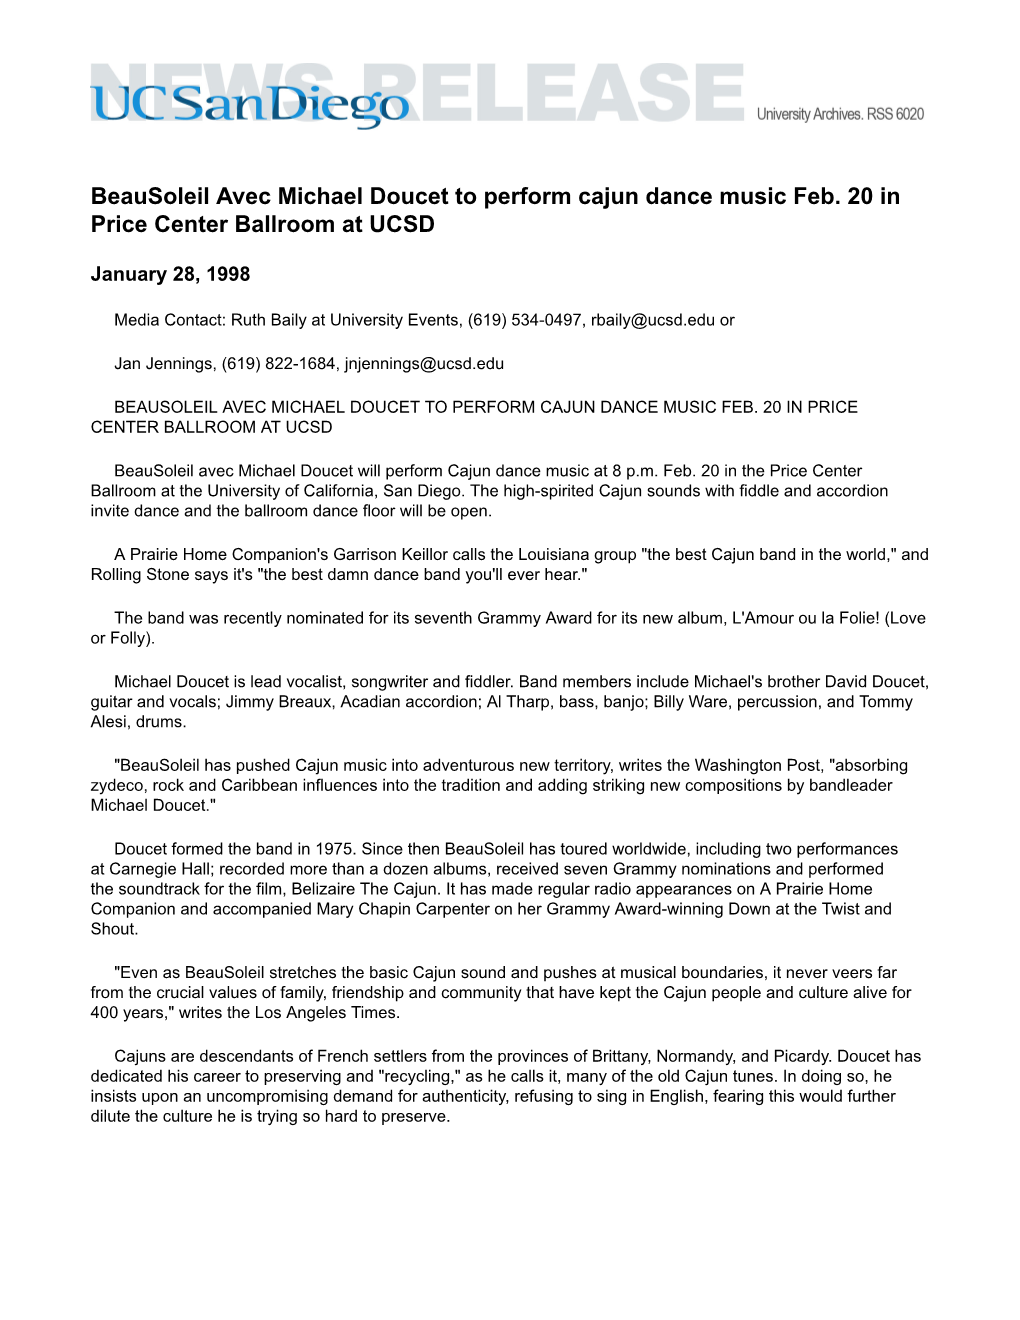 Beausoleil Avec Michael Doucet to Perform Cajun Dance Music Feb. 20 in Price Center Ballroom at UCSD